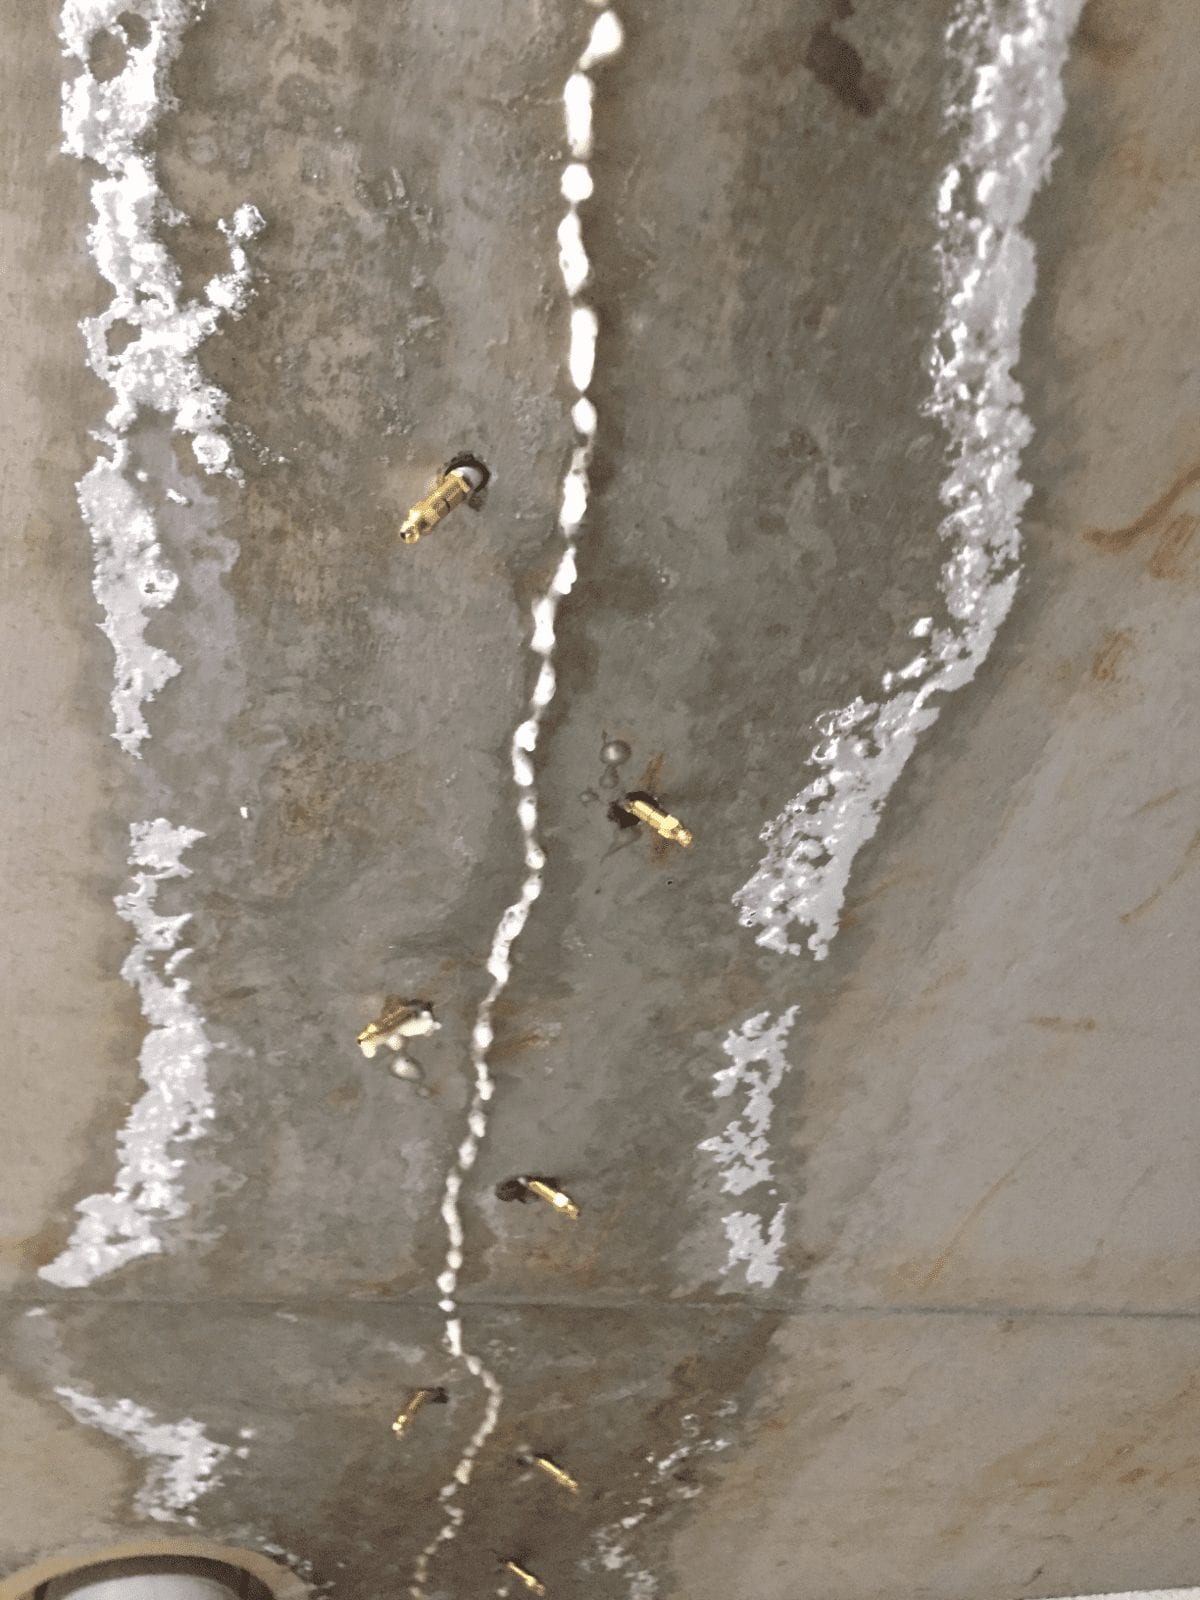 Overhead leak sealing - crack injection in concrete slab